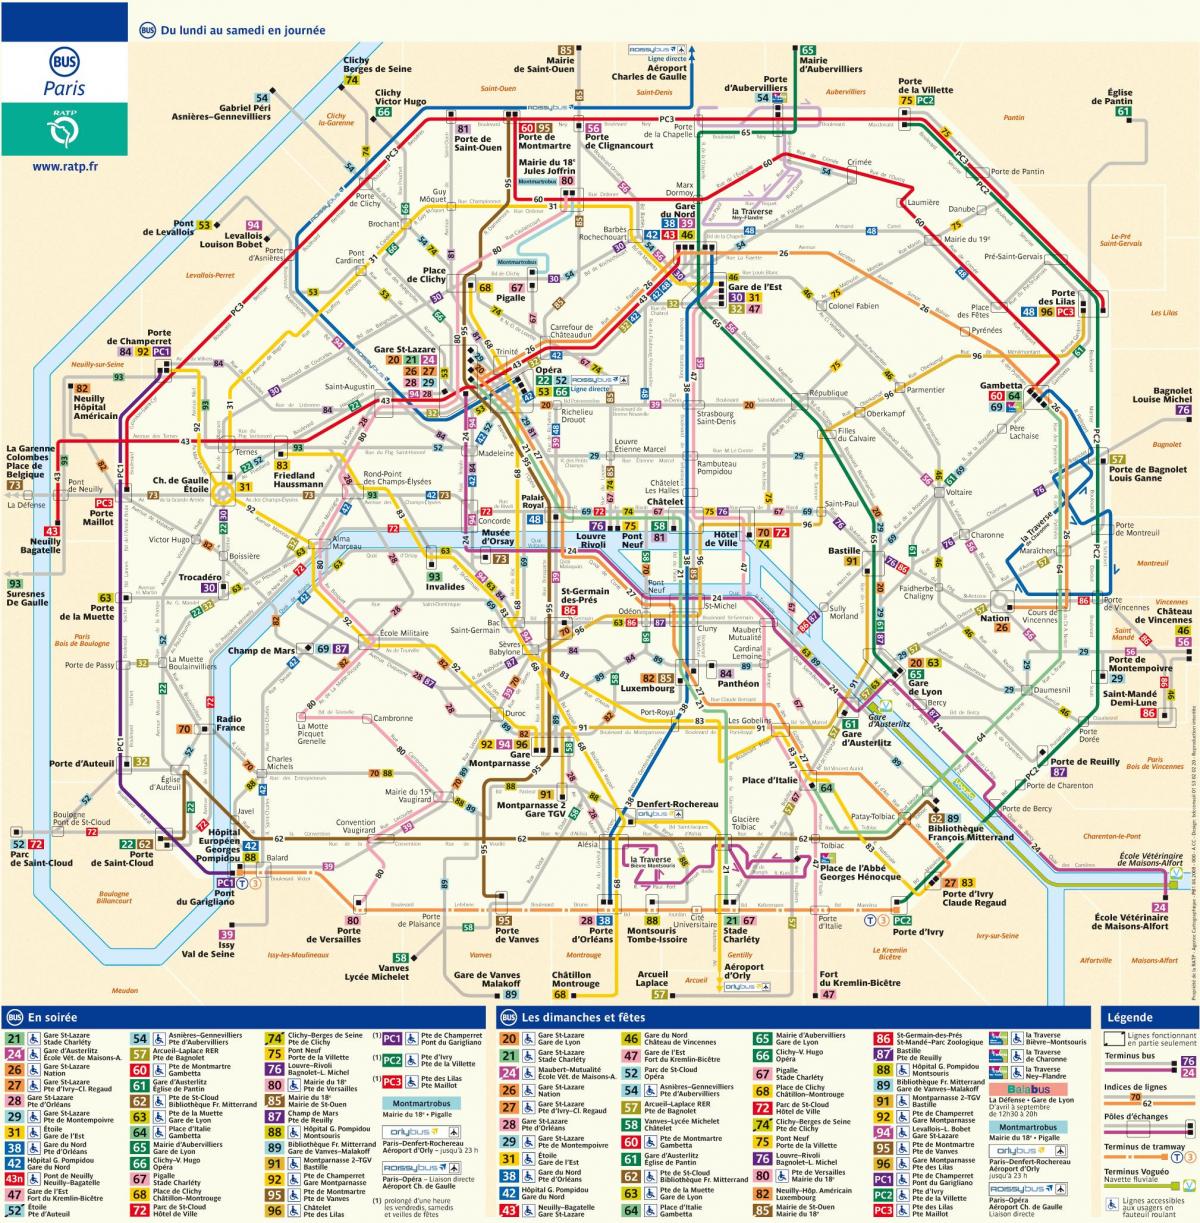 Kart over RATP-bussen